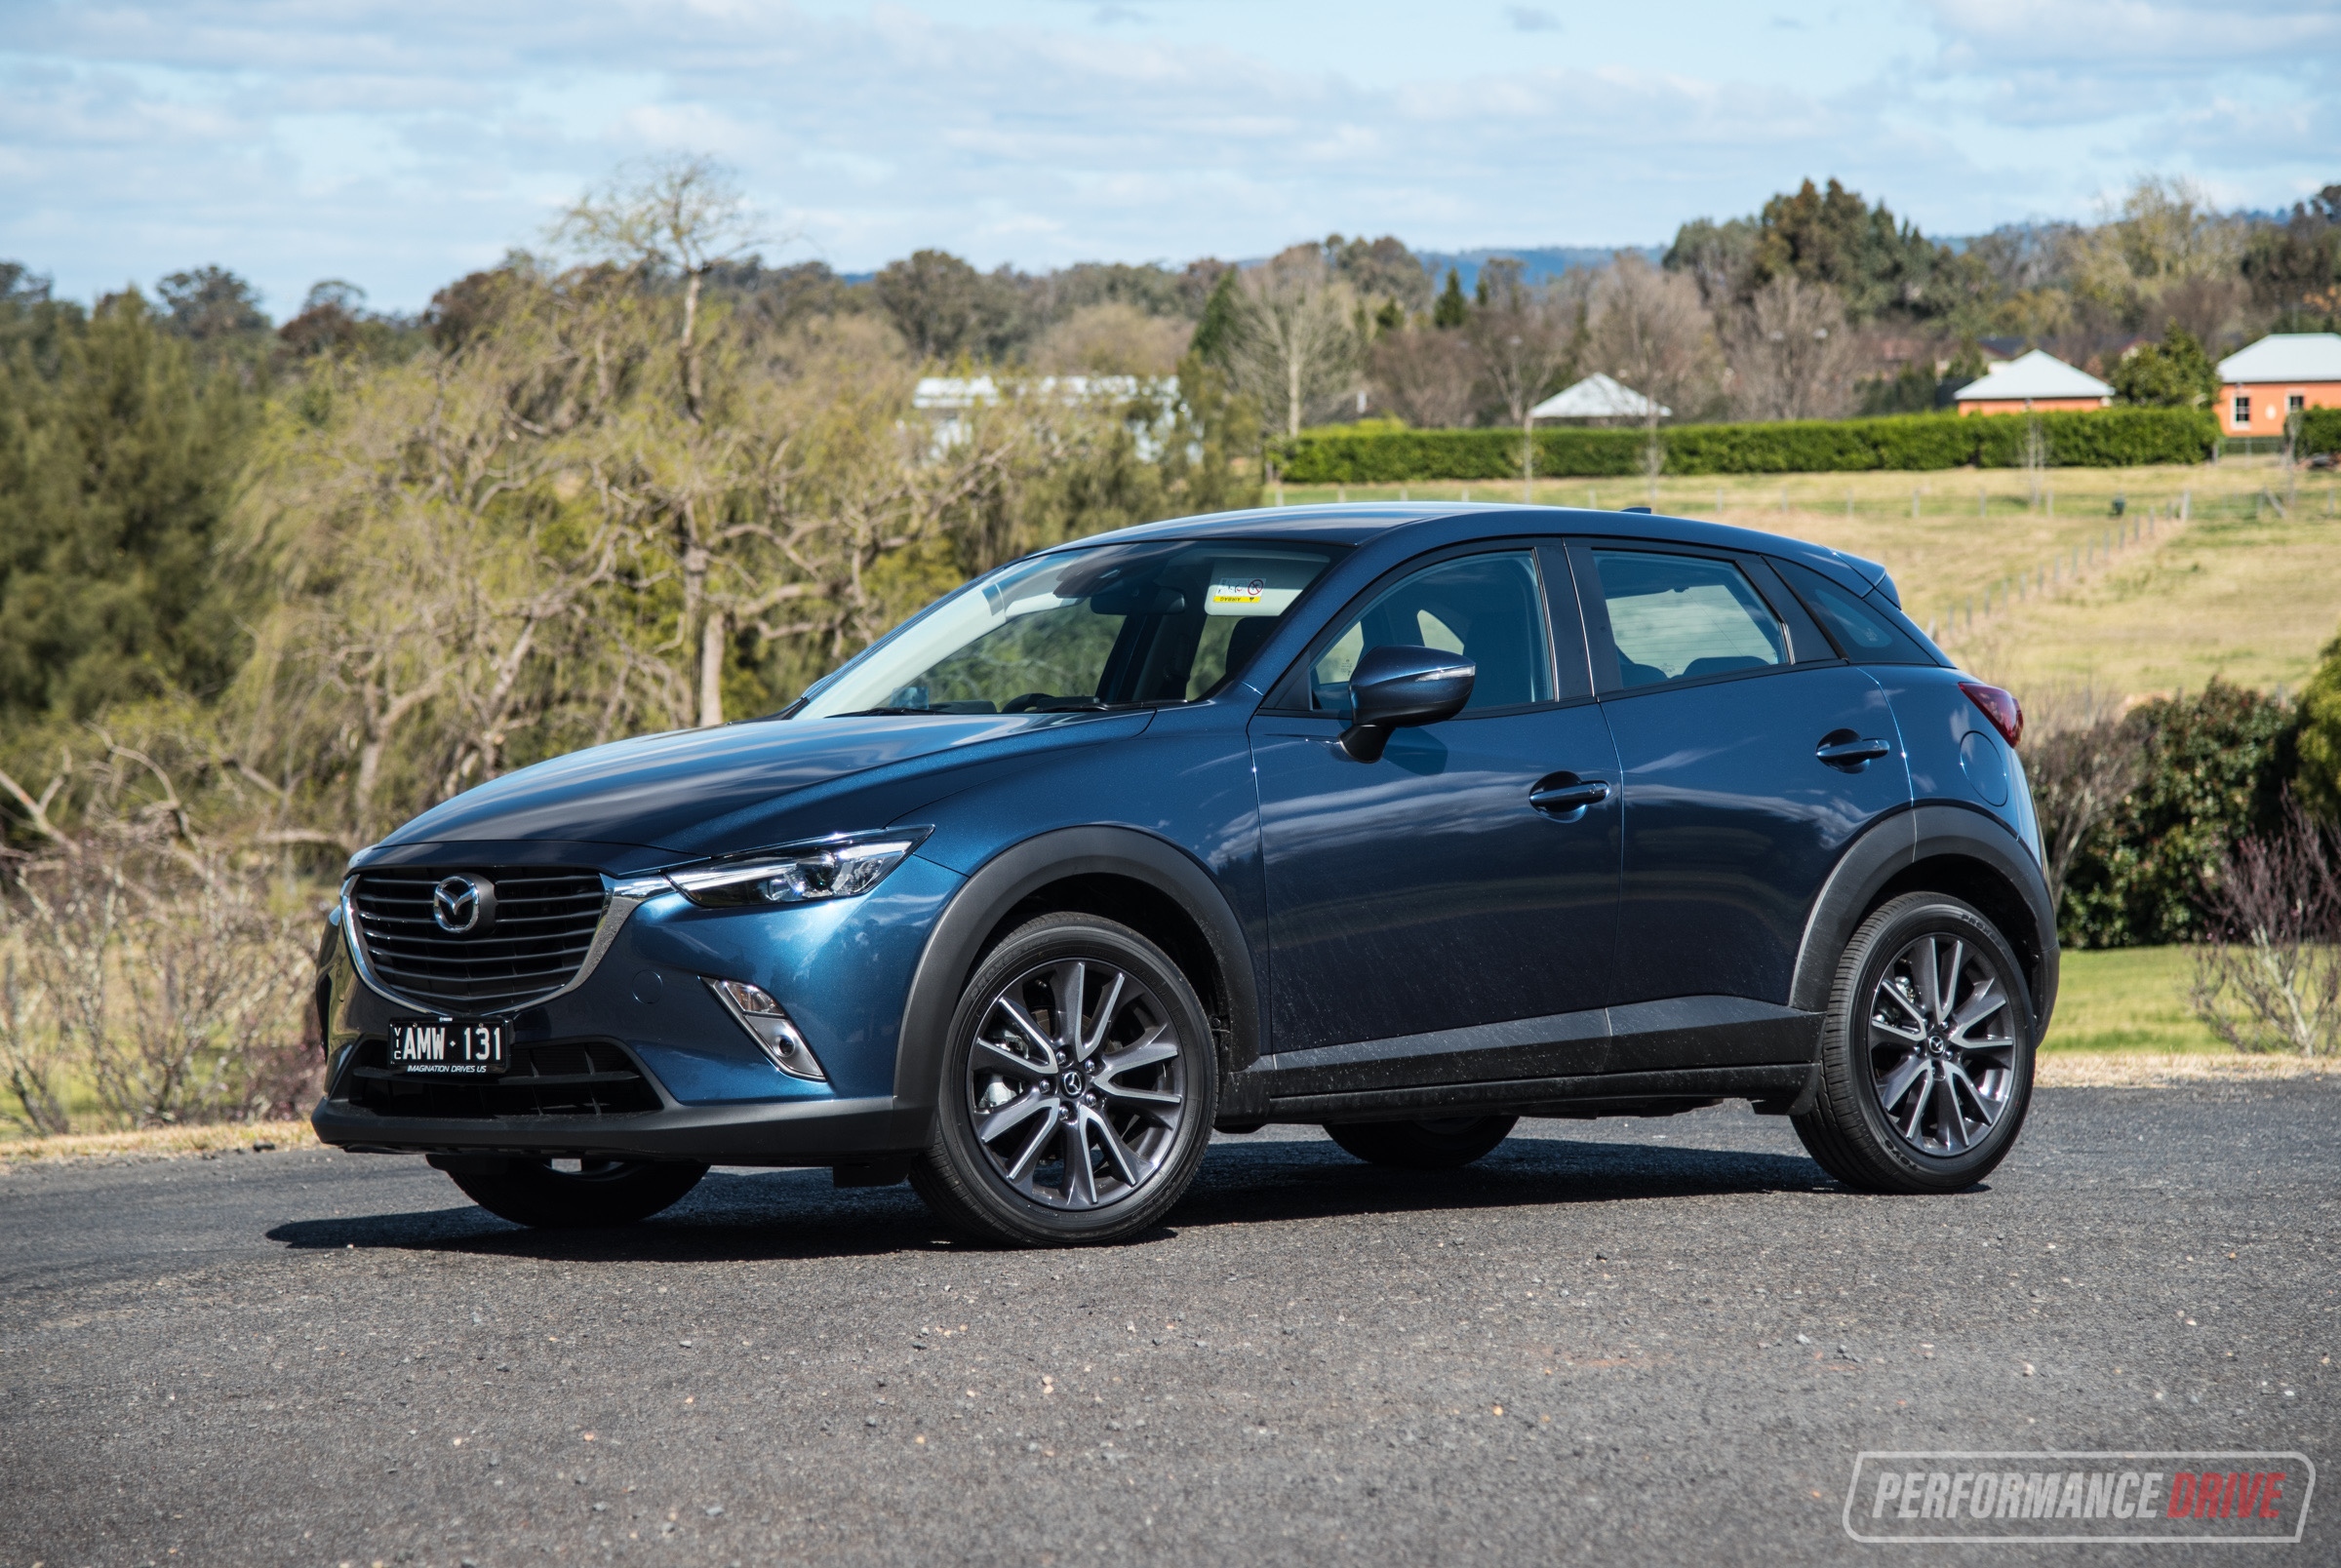 2017 Mazda CX3 sTouring AWD review (video) PerformanceDrive